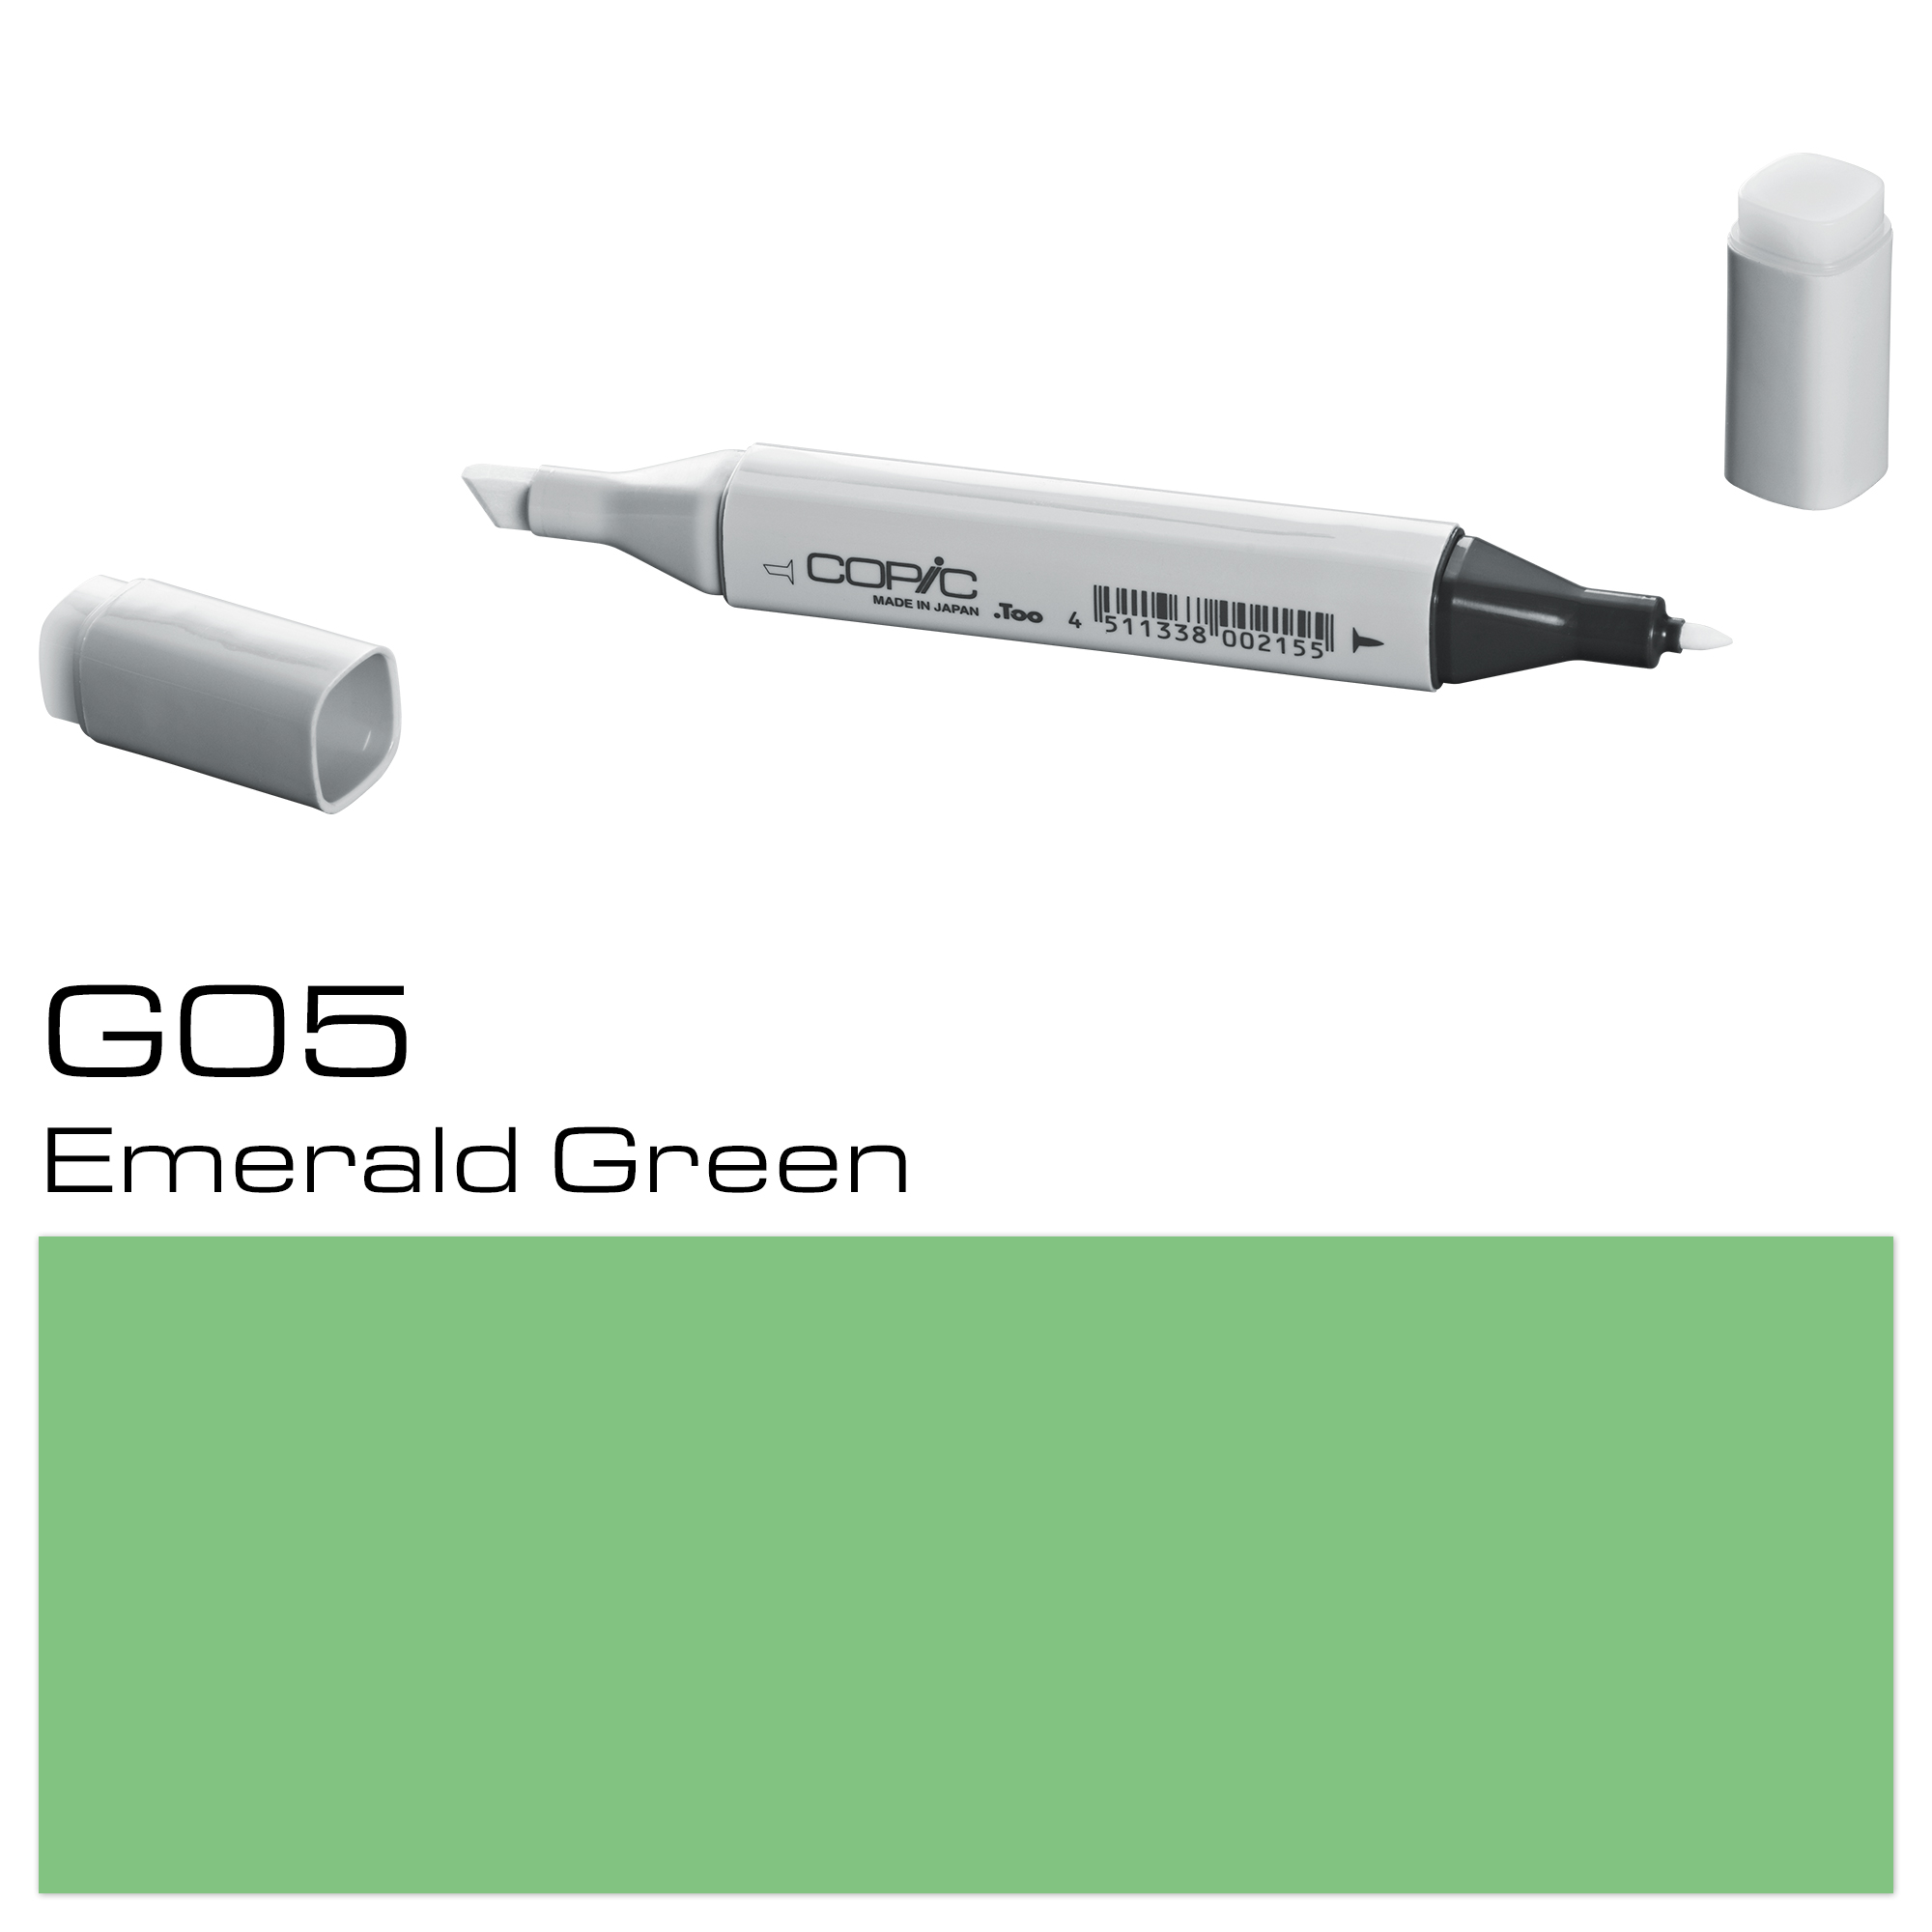 COPIC MARKER EMERALD GREEN G05